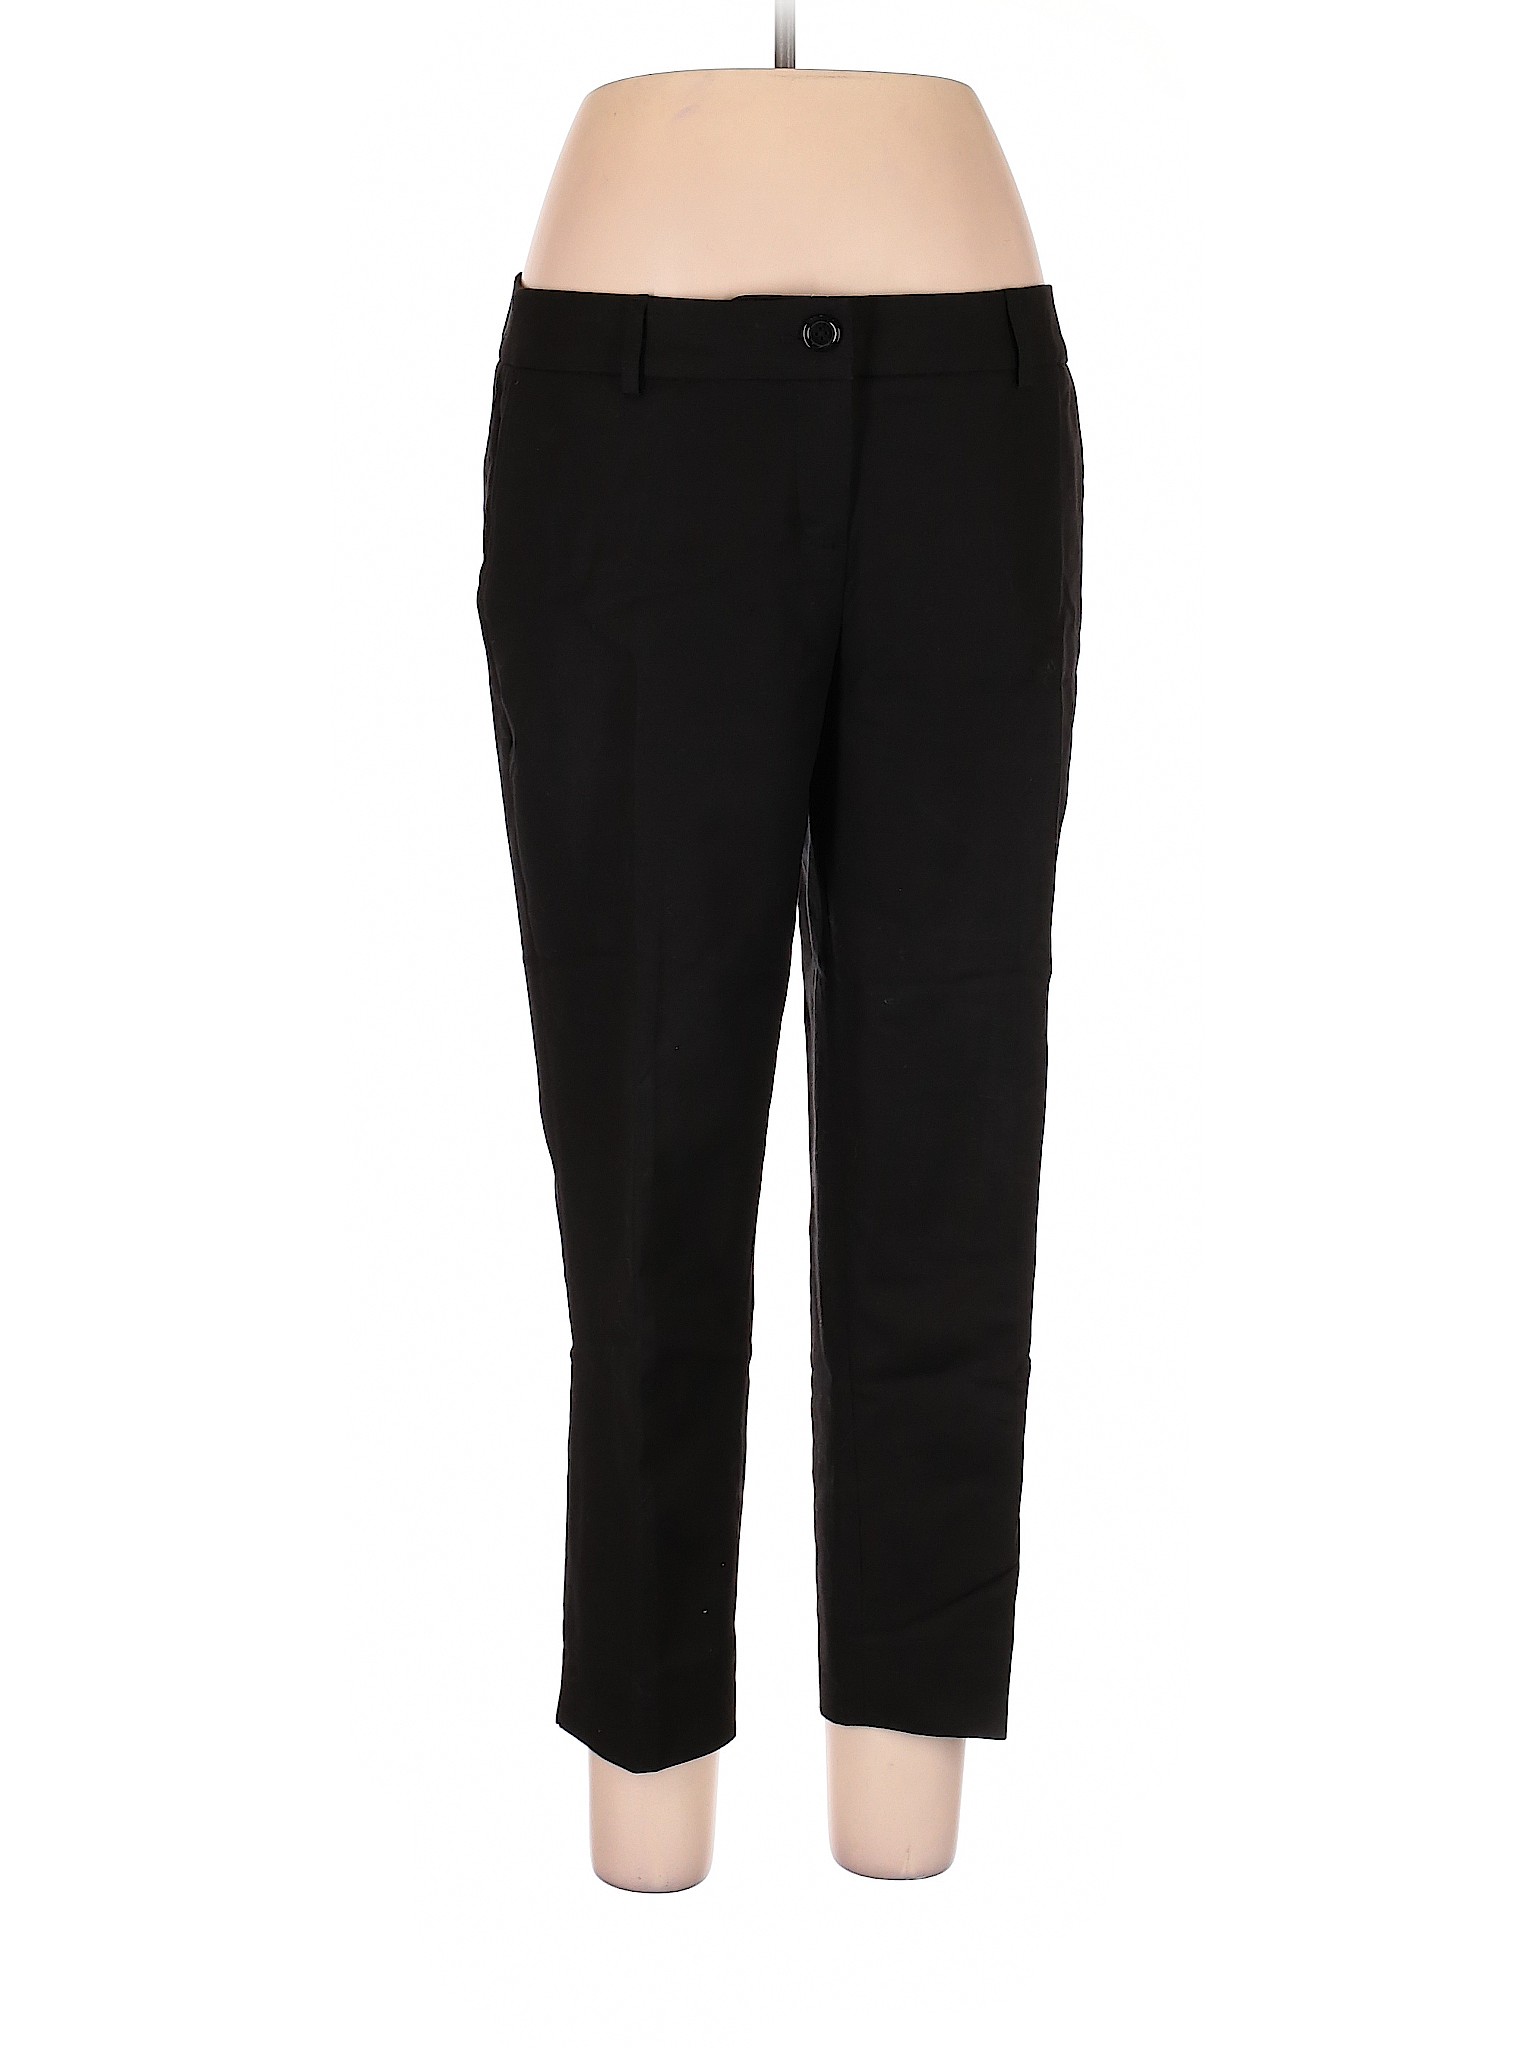 Hilary Radley Women Black Dress Pants 10 | eBay